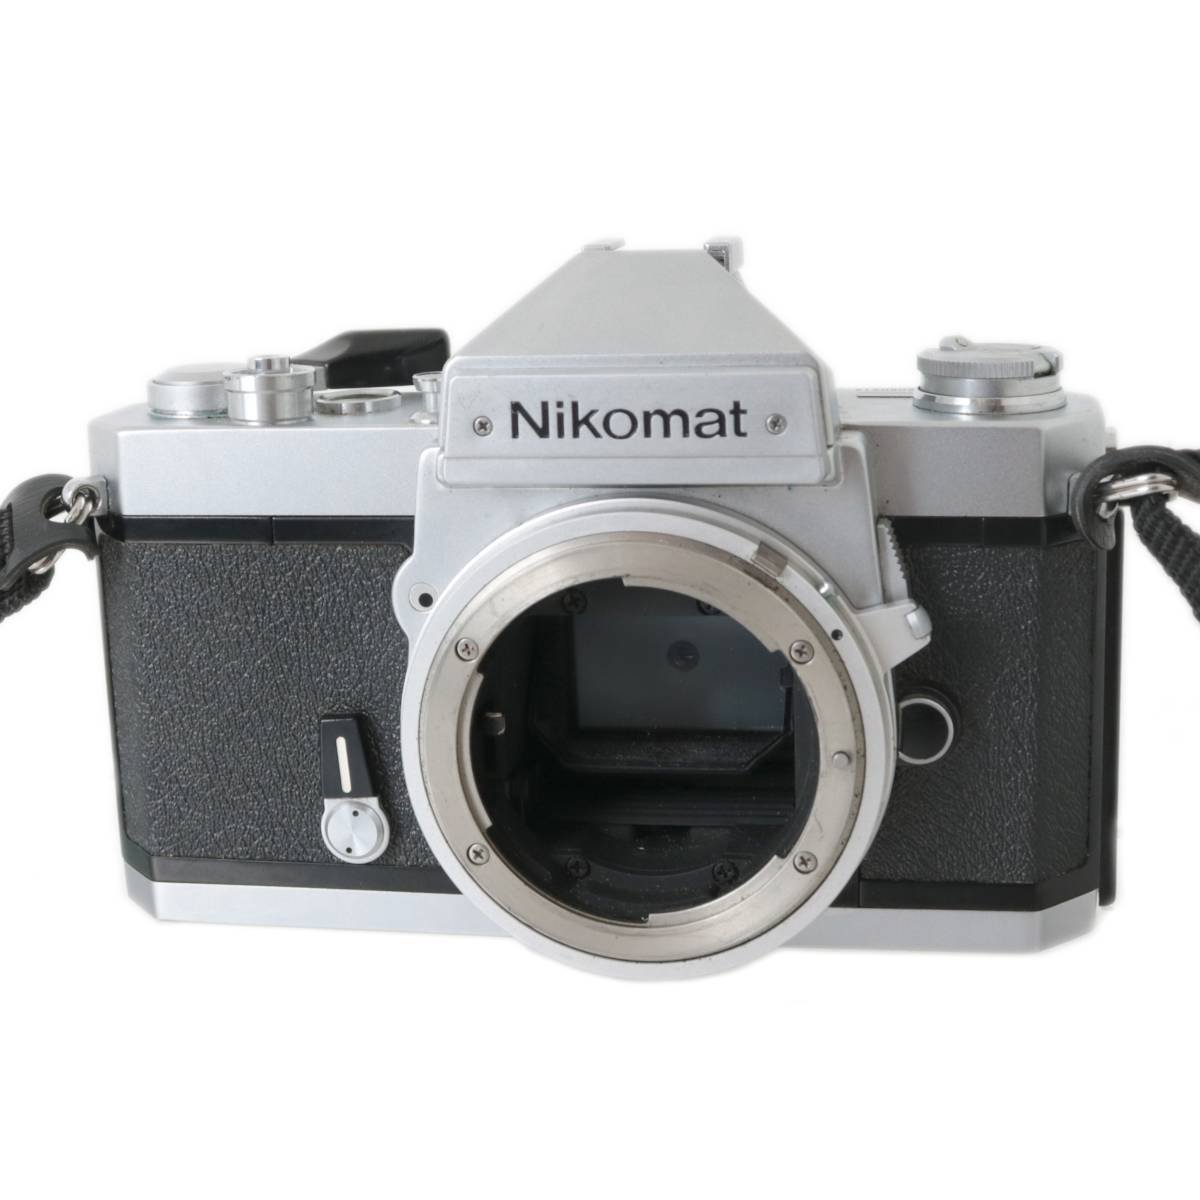 Nikon ニコン Nikomat FT3 シルバーボディ フィルムカメラ 一眼レフ 6050912 赤黒ストラップ NT Bランク